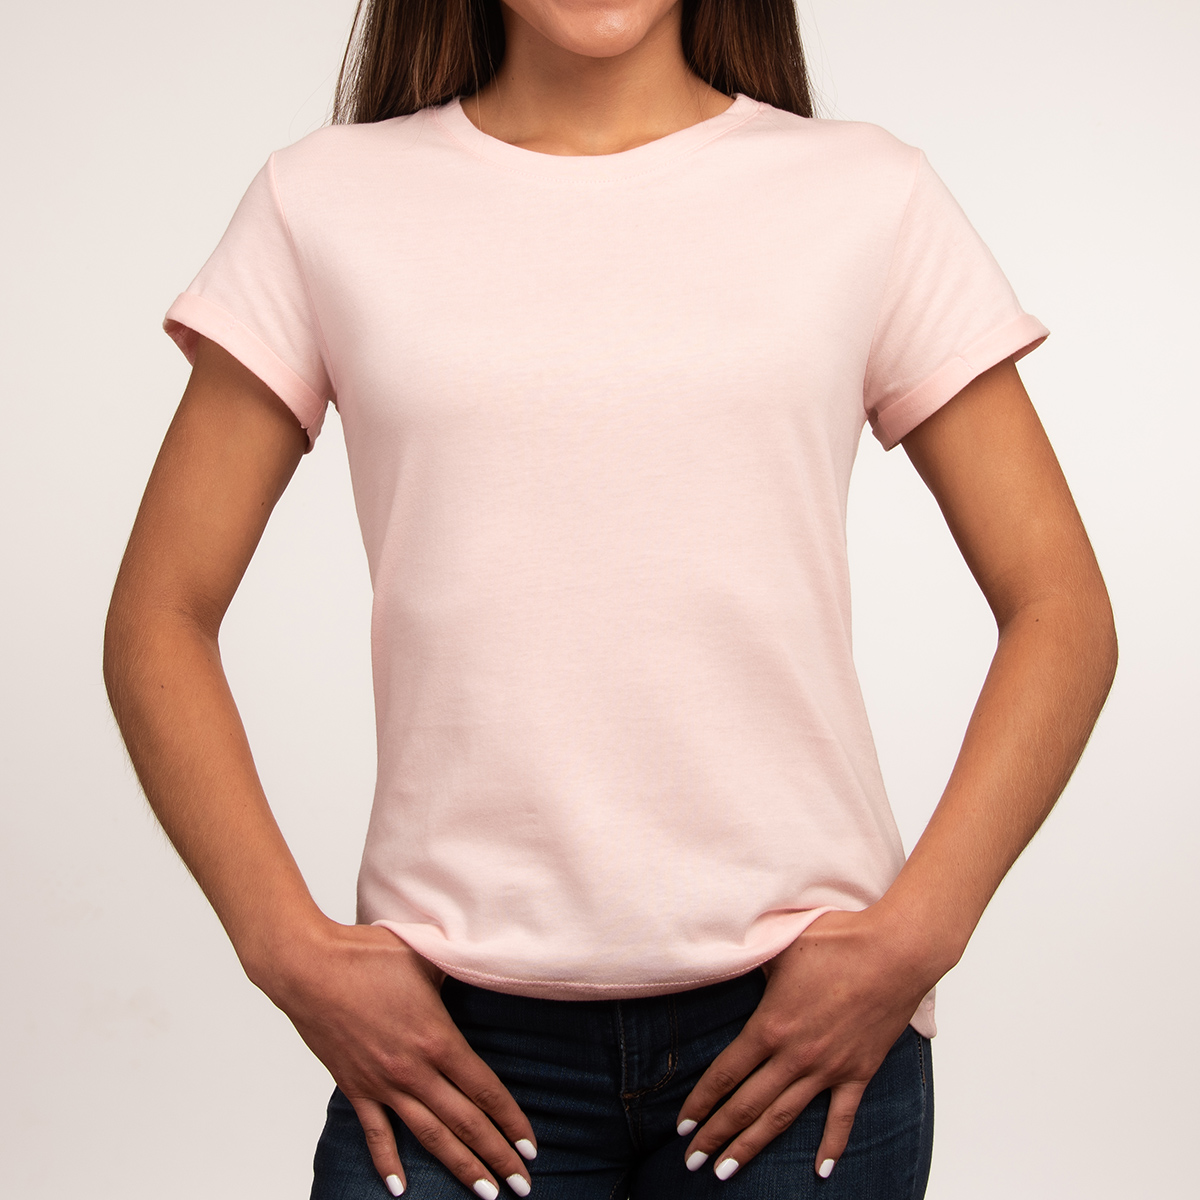 Camiseta con frase rosa mujer sale pa pintura navy blue recoleta